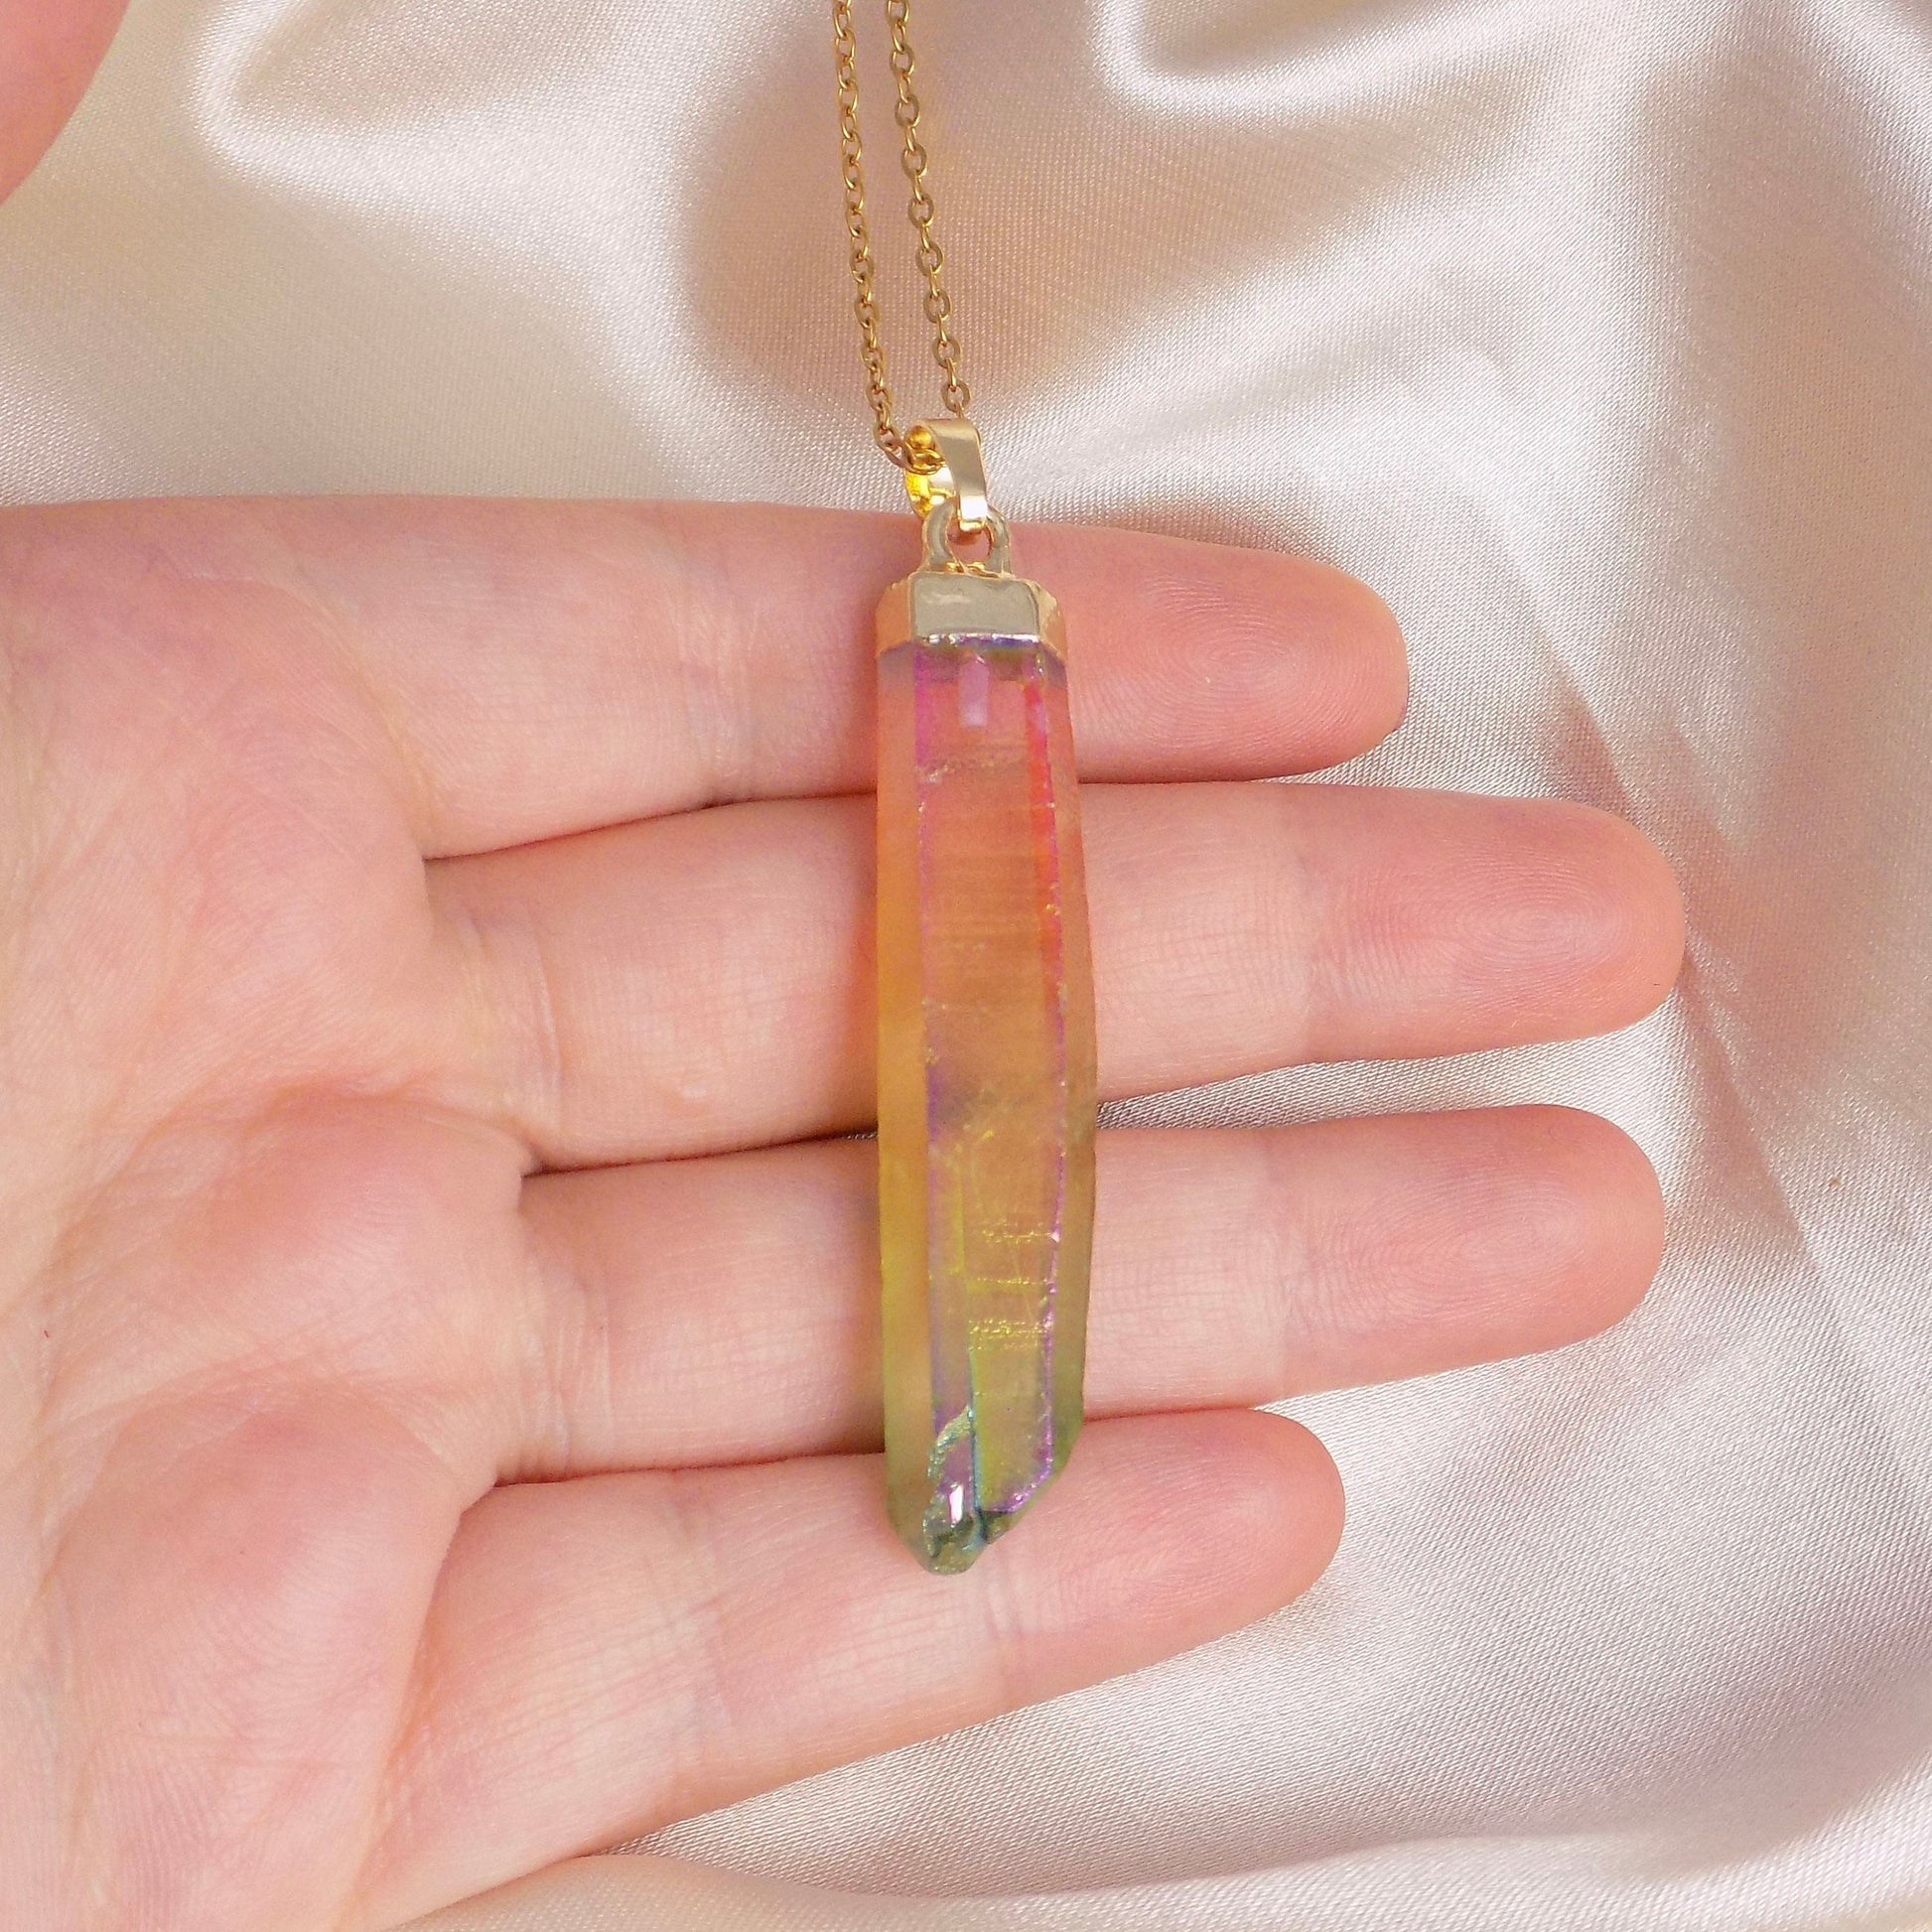 Rainbow Aura Quartz Necklace Gold, Unique Iridescent Crystal Jewelry Boho, Gift For Her, M7-05